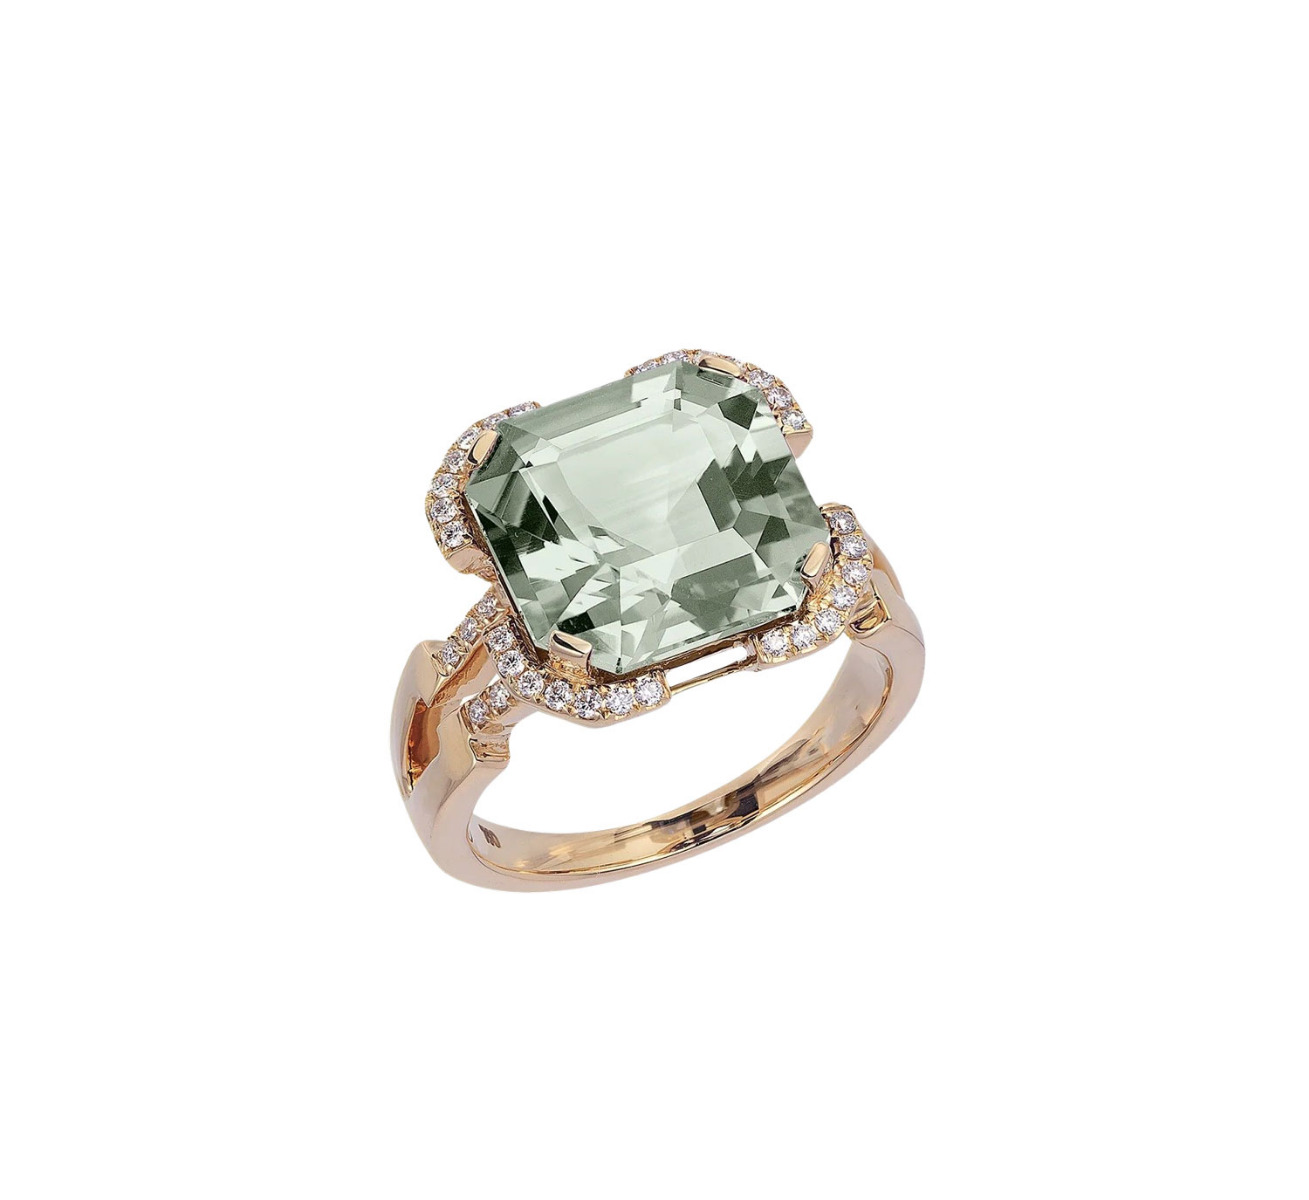 Goshwara "Gossip" Prasiolite Square Emerald Cut Ring with Diamonds In 18kt Yellow Gold